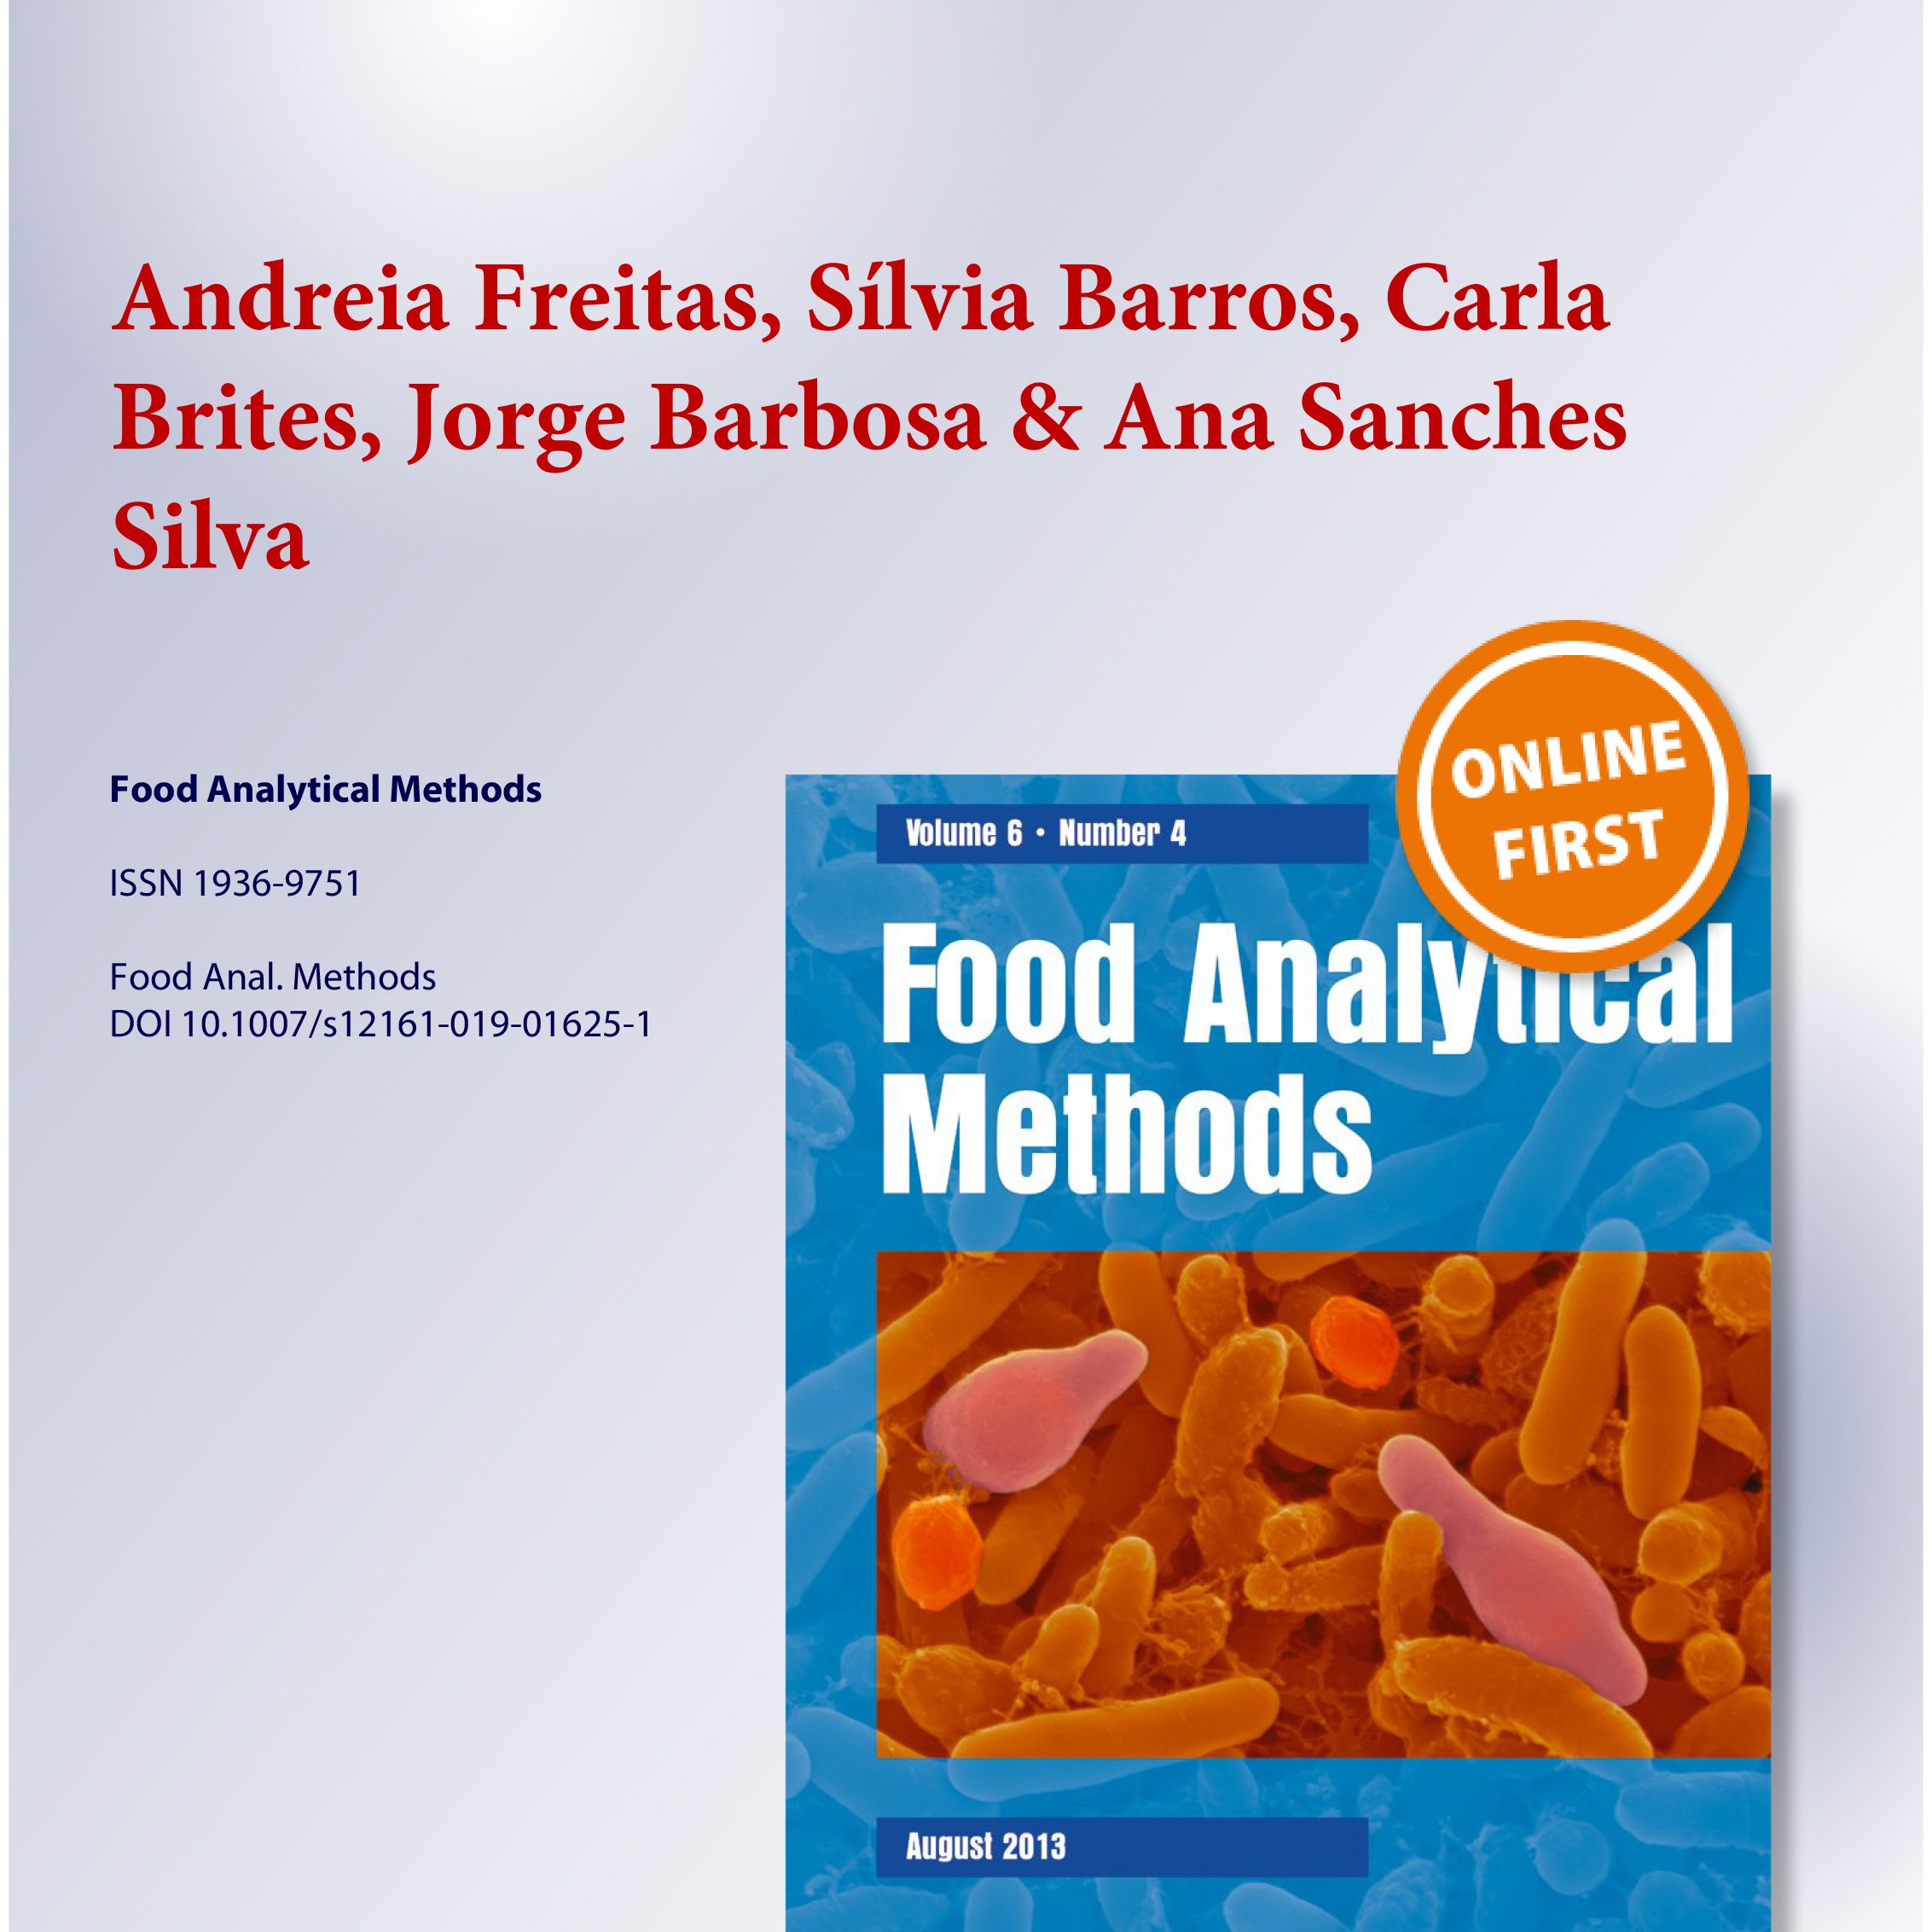 Food Anal. Methods, doi:10.1007/s12161-019-01625-1